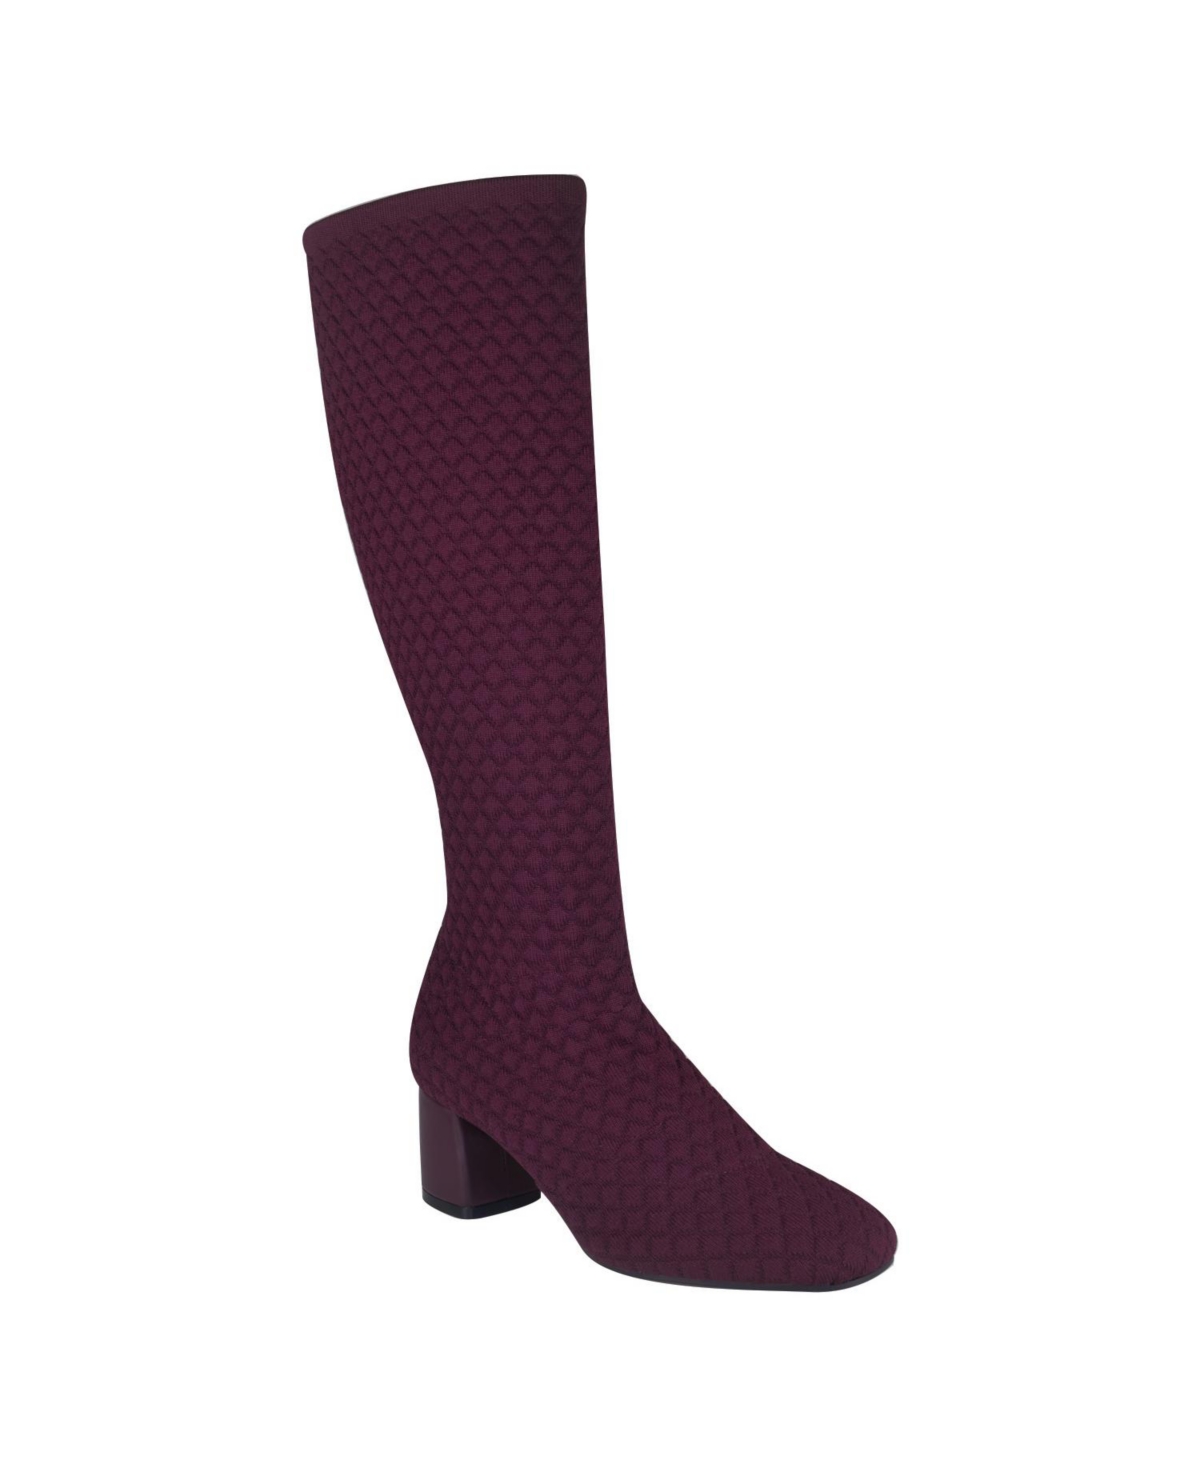 Women's Jenner Memory Foam Stretch Knit Knee High Boots - Burgundy